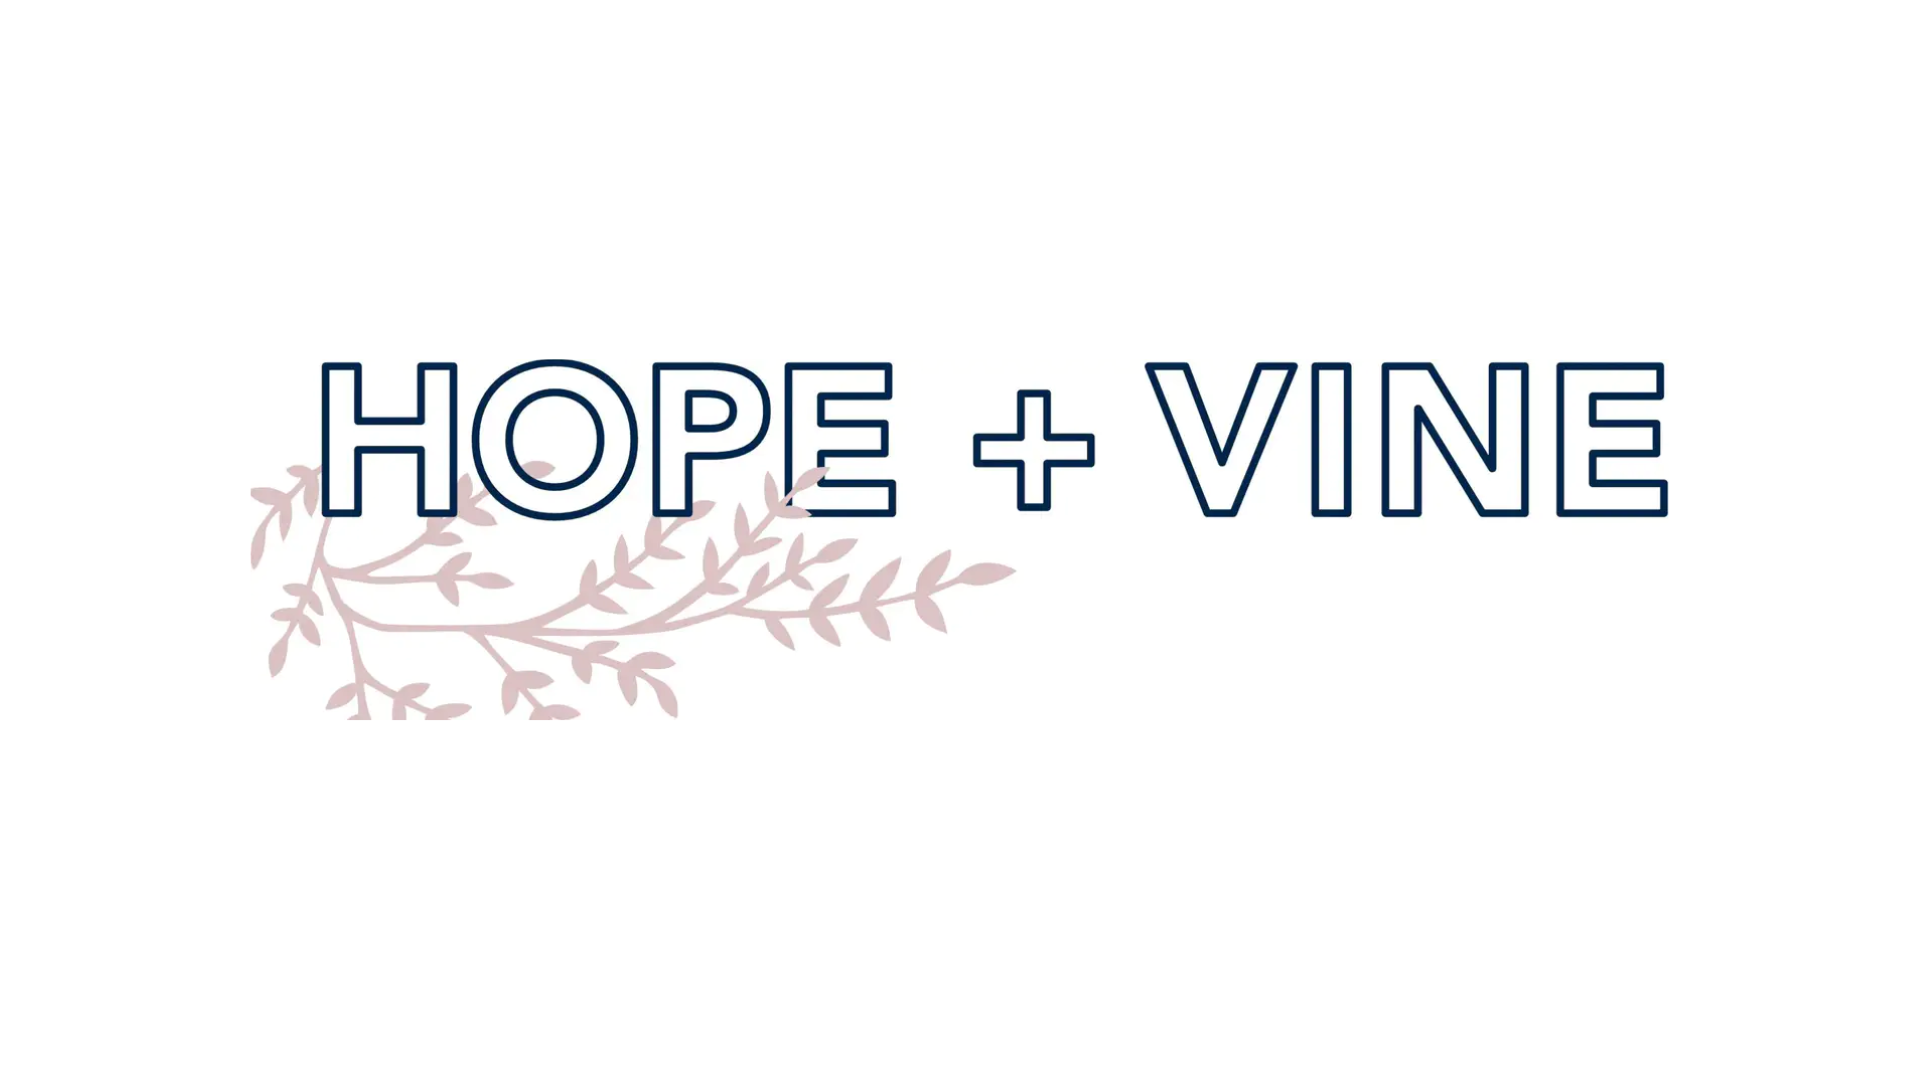 Hope + Vine Project 2023 photo